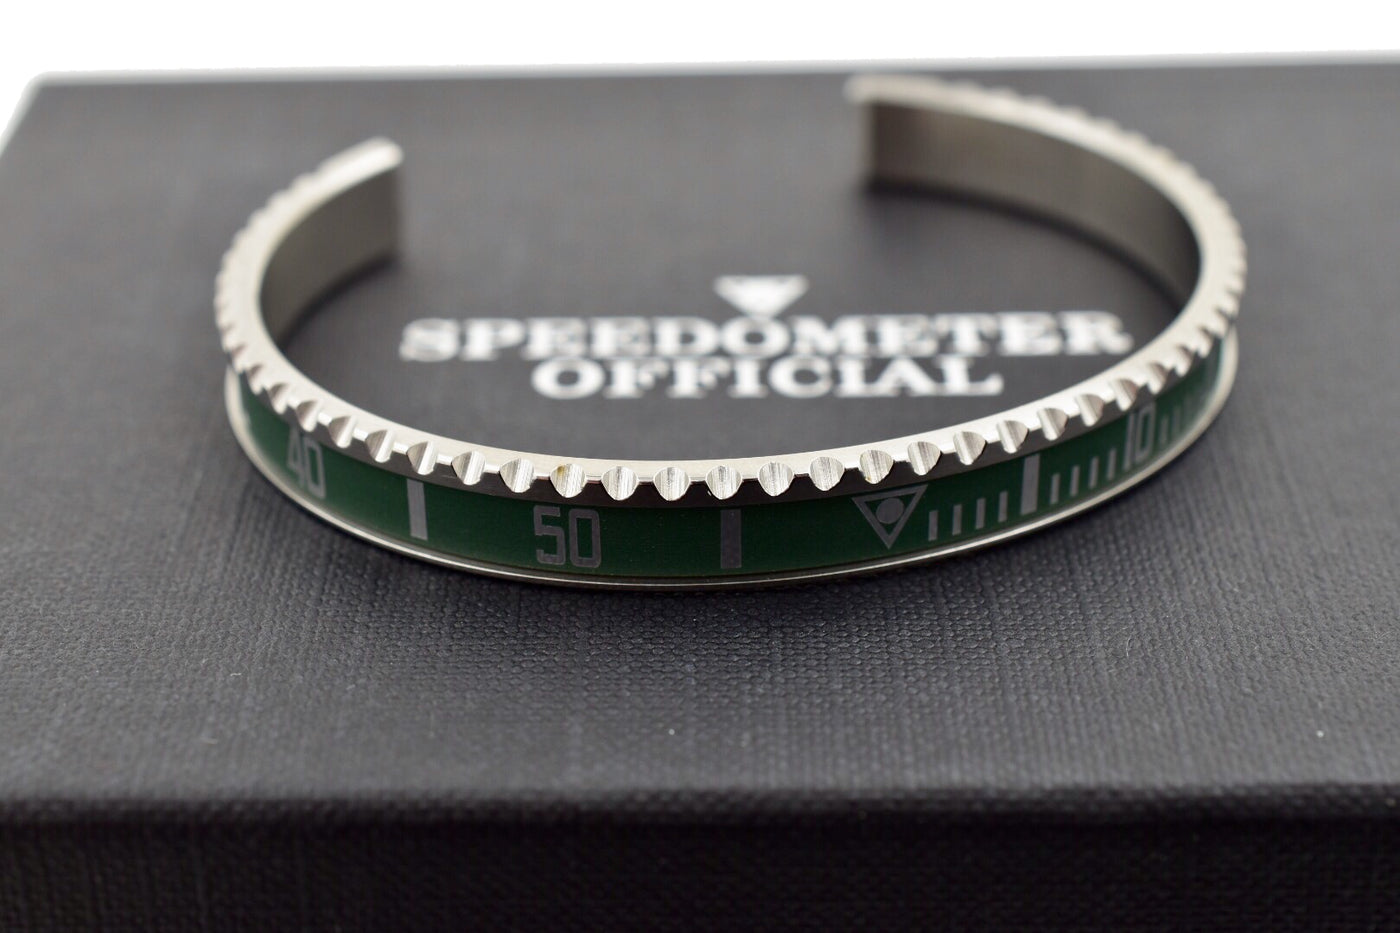 Speedometer Official Silver Steel Vintage Matt Green & Silver Bangle Bracelet-Speedometer Official-Truphae